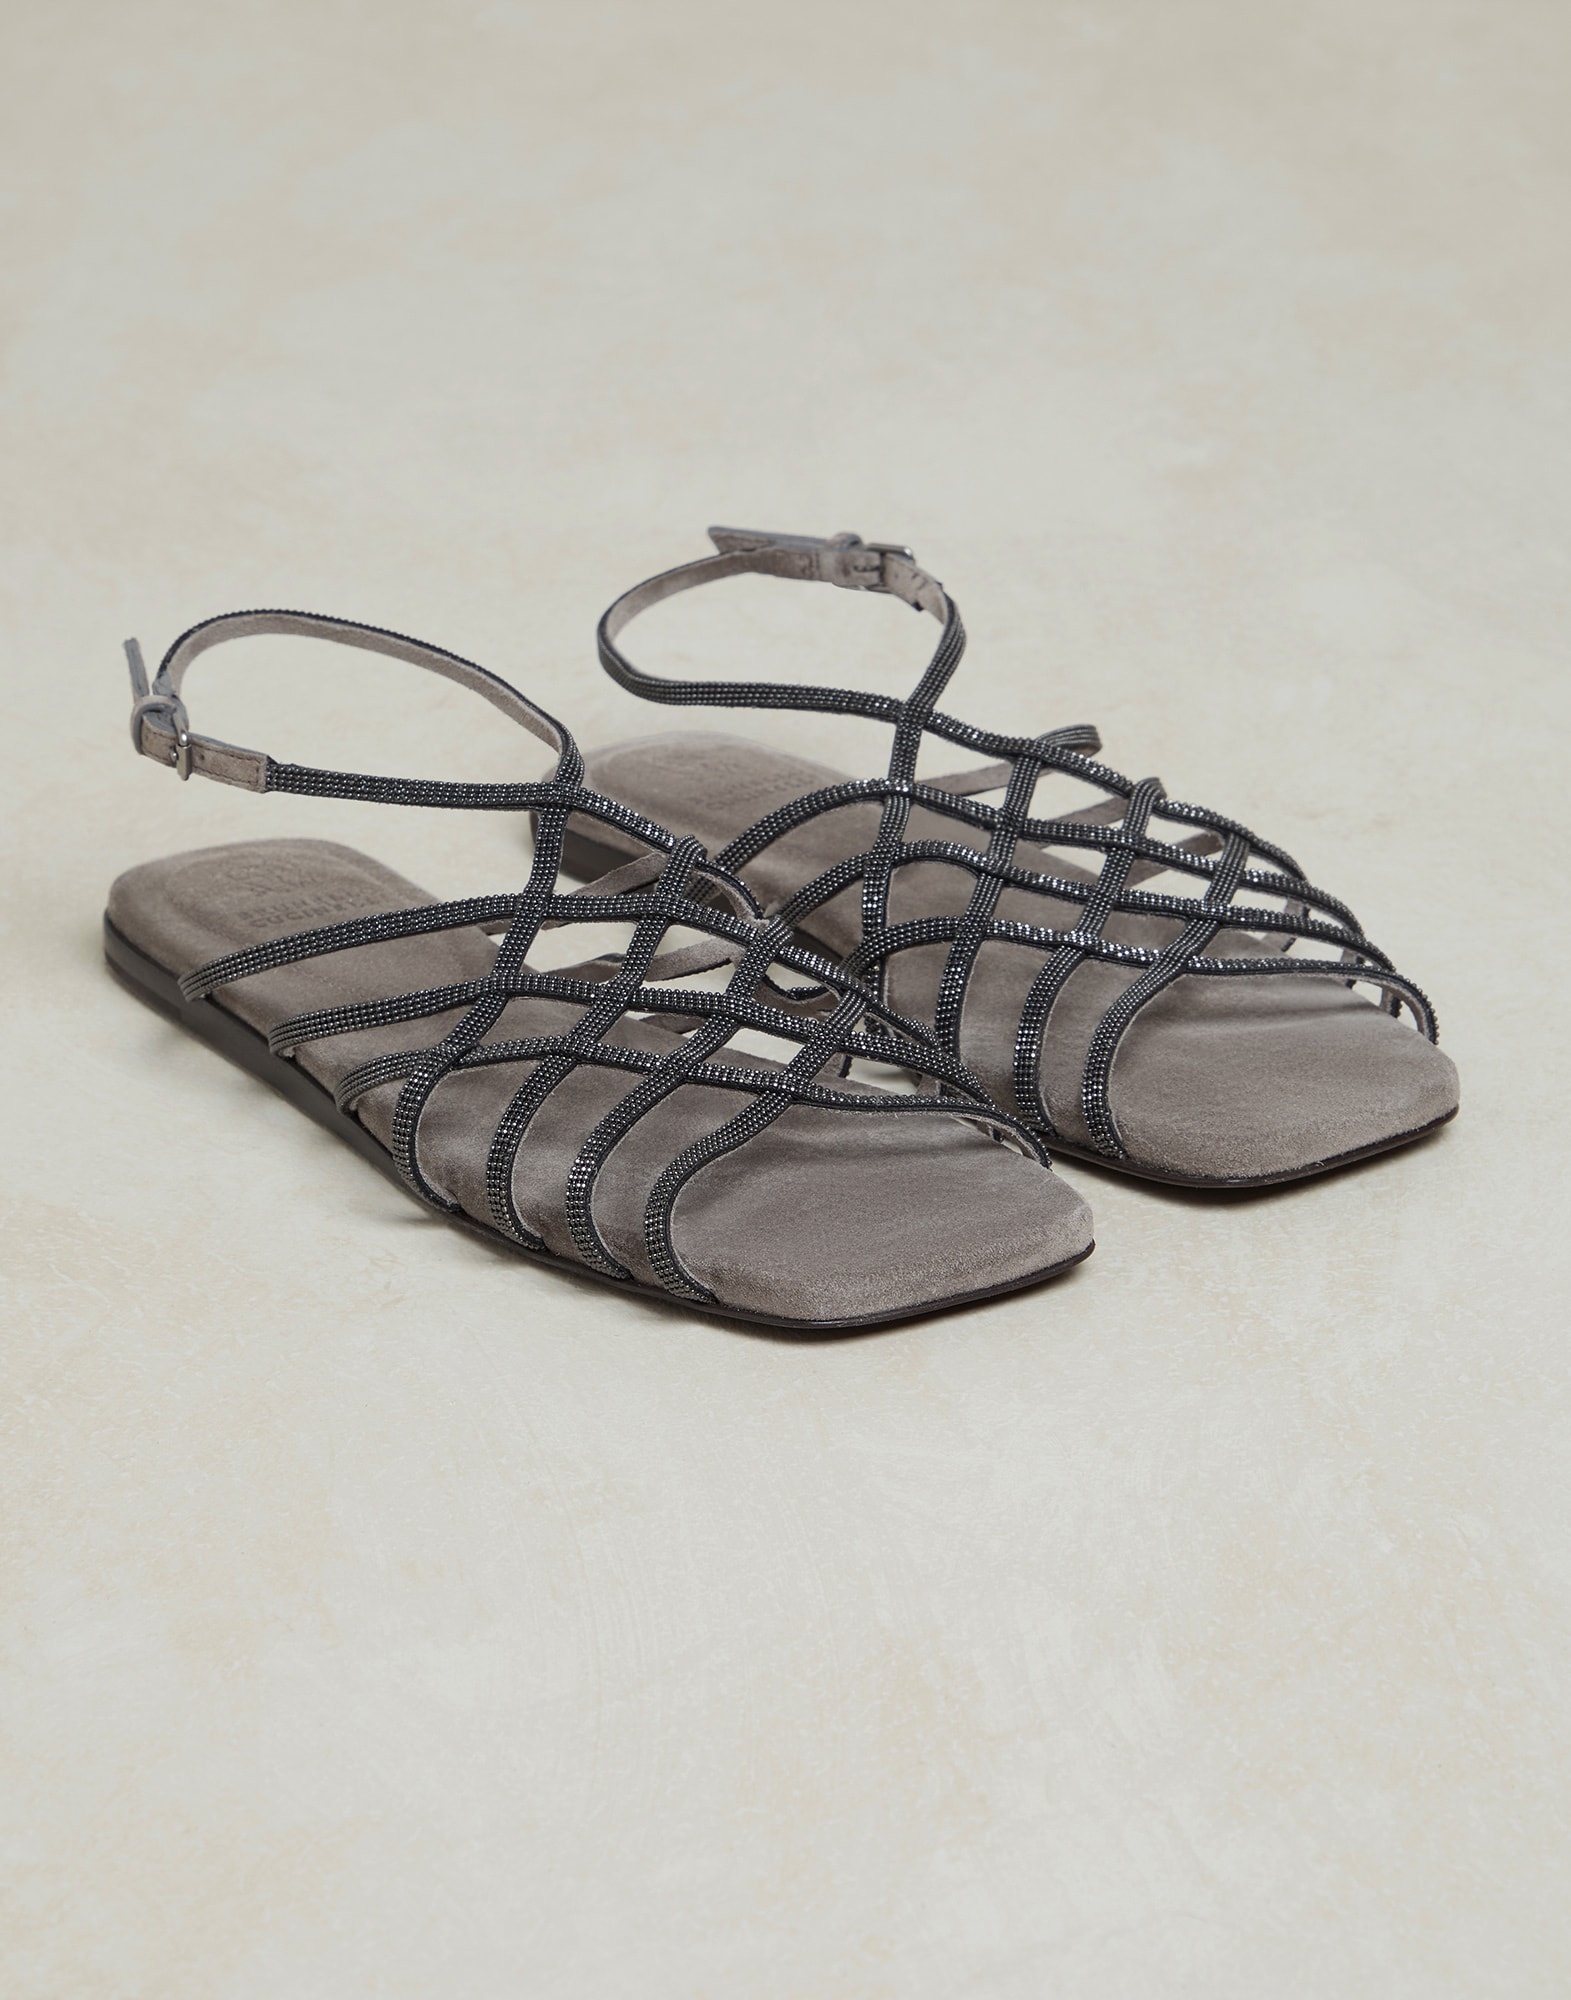 Precious Net sandals in suede - 2